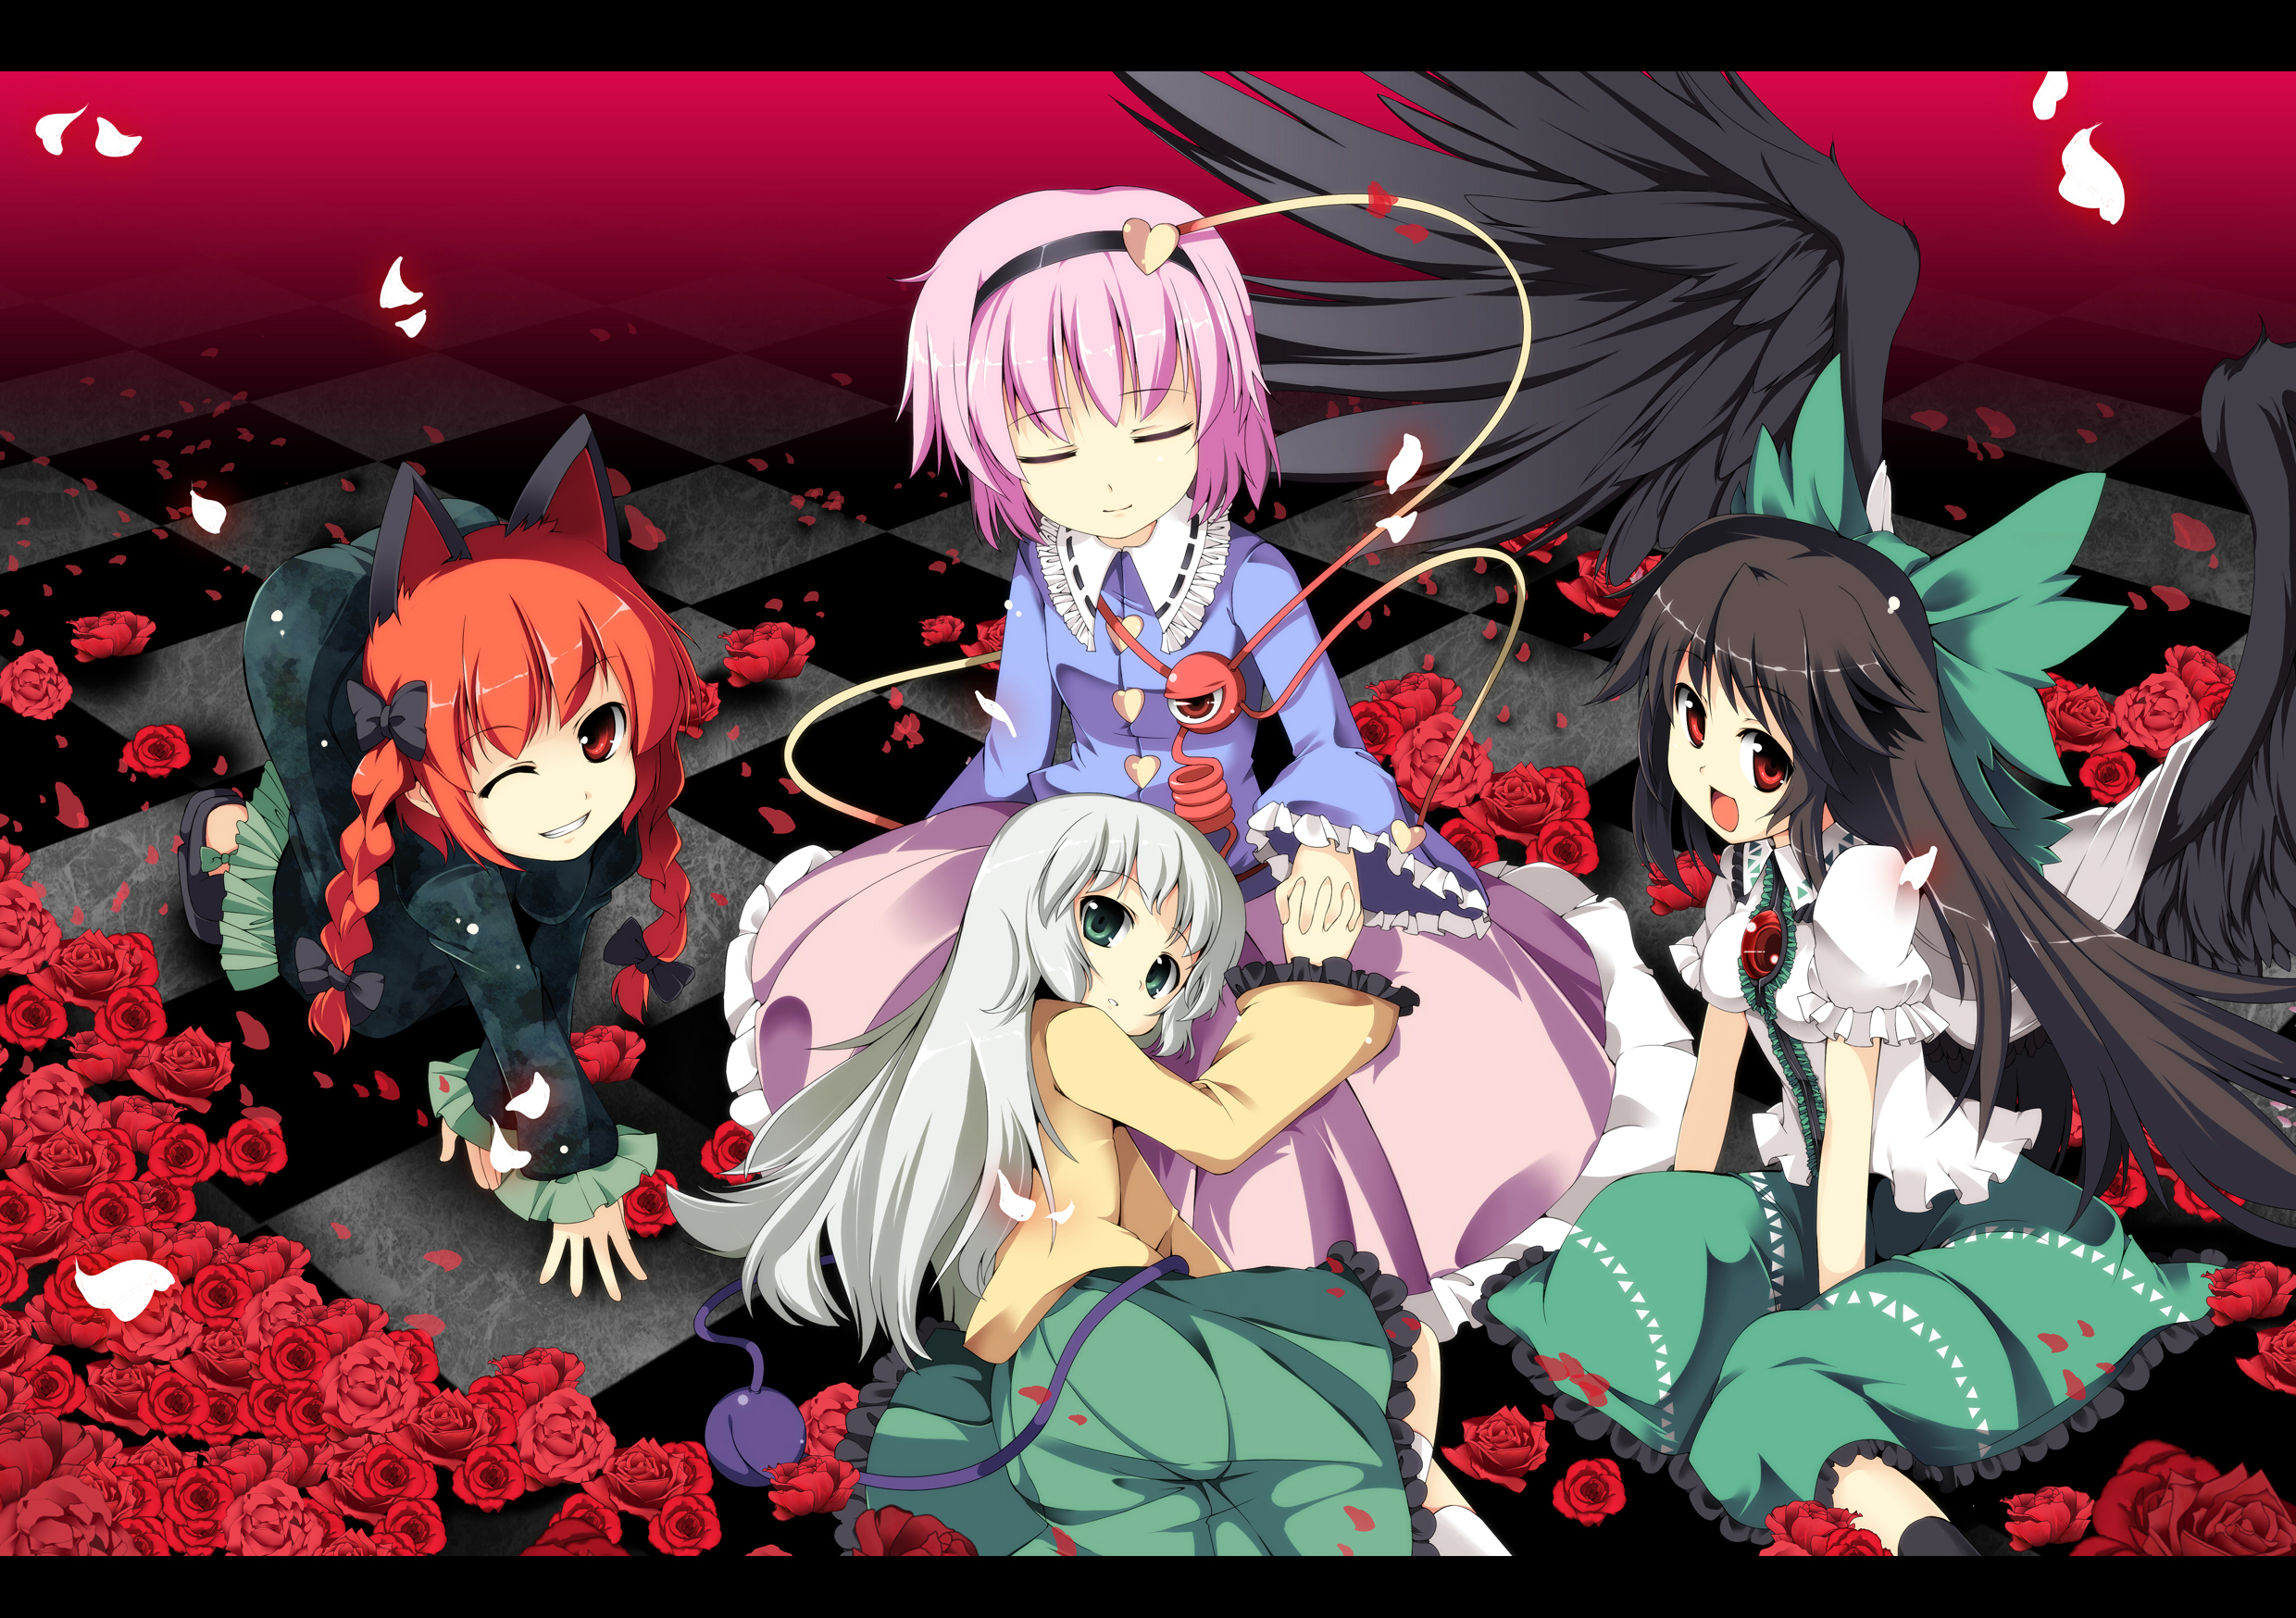 Baixe gratuitamente a imagem Anime, Touhou, Utsuho Reiuji, Koishi Komeiji, Satori Komeiji, Rin Kaenbyou na área de trabalho do seu PC